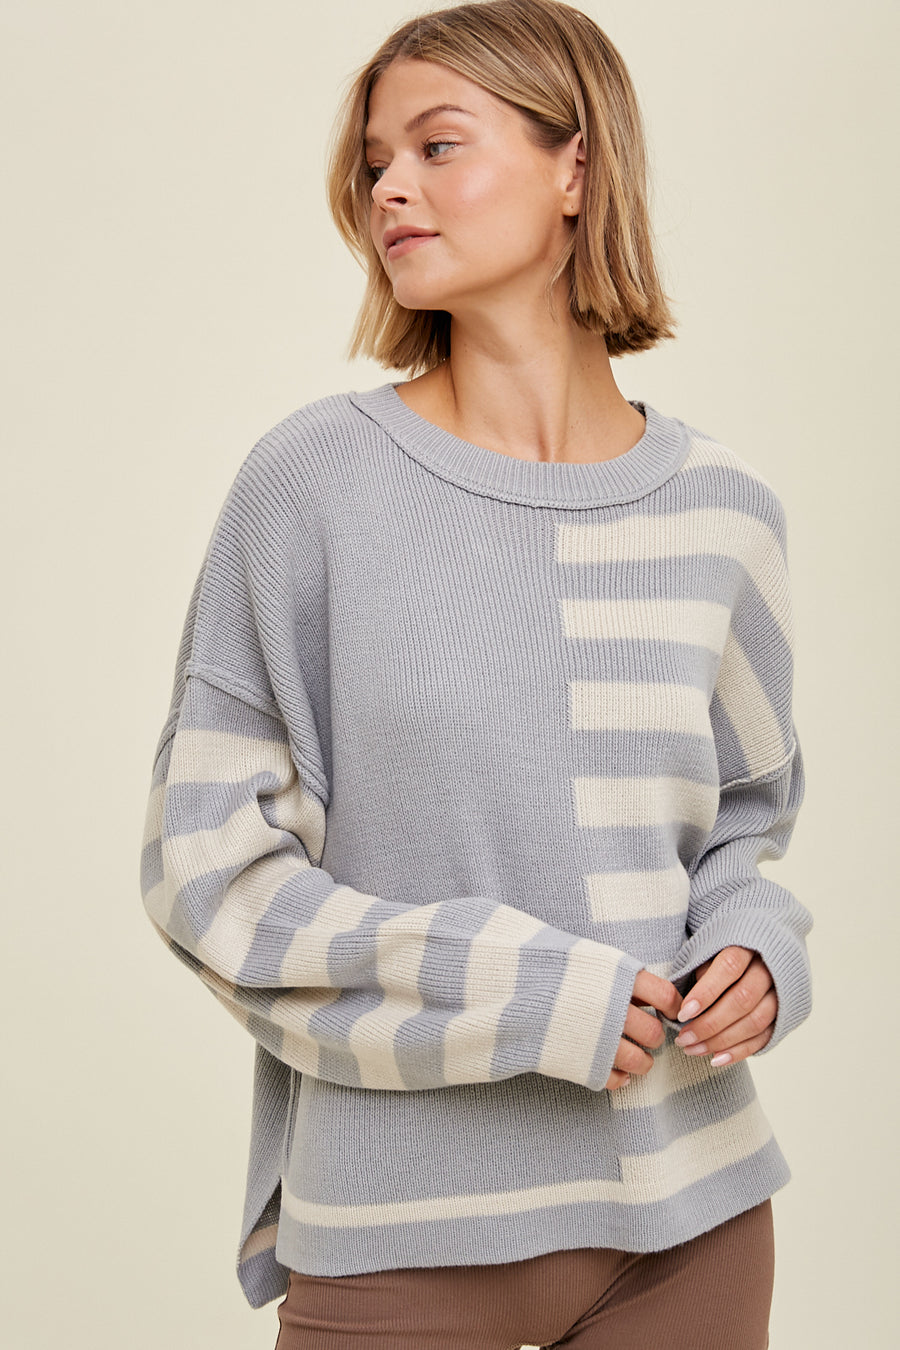 Say It Again Cloud Stripe Sweater